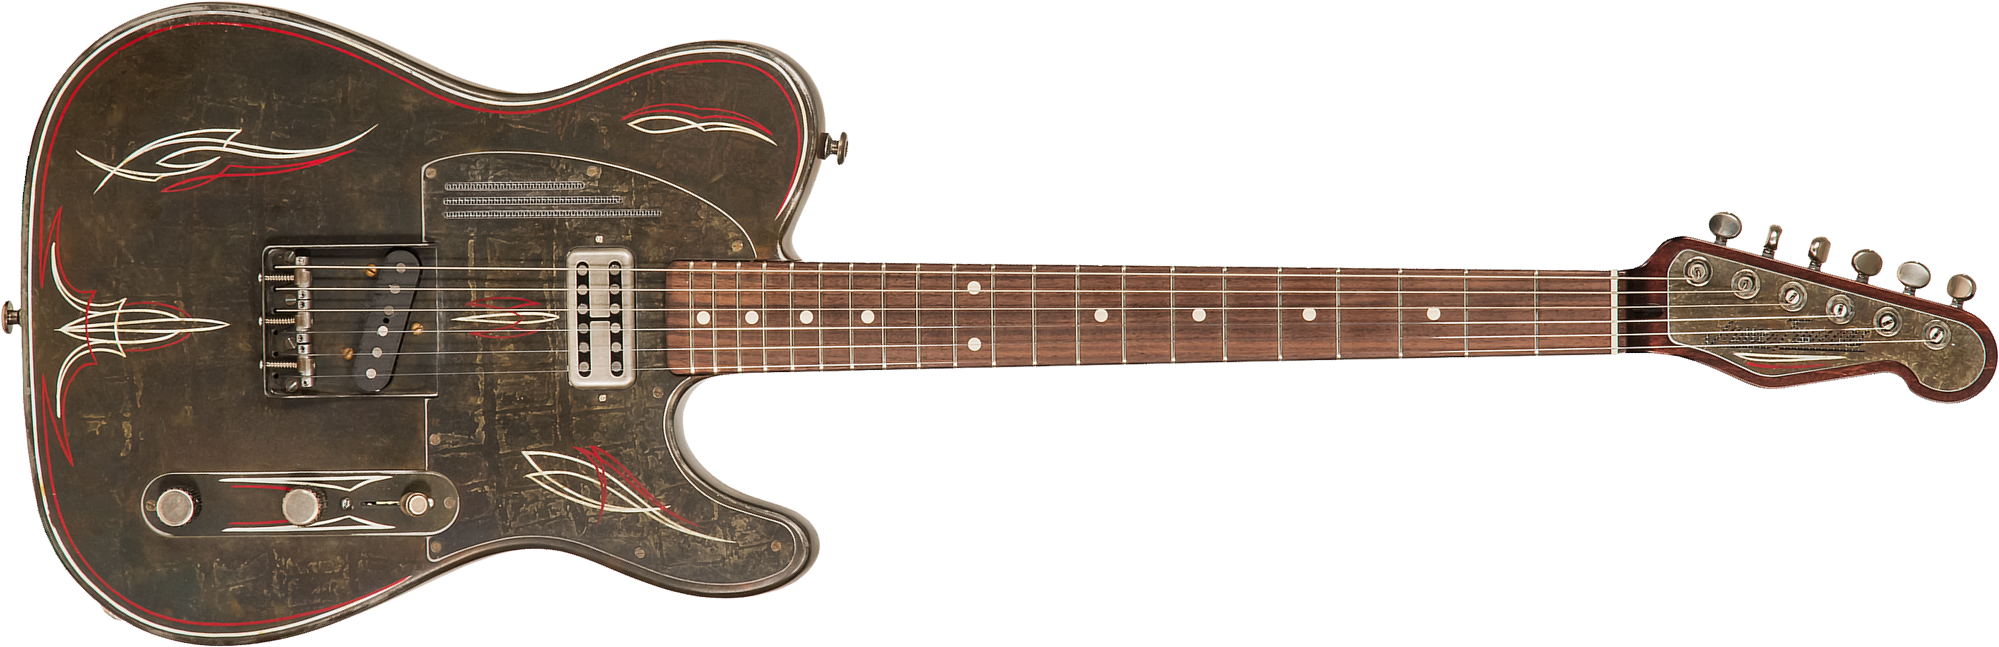 James Trussart Steelcaster Perf.back Sh Tv Jones Ht Rw #21167 - Rust O Matic Pinstriped - E-Gitarre in Teleform - Main picture